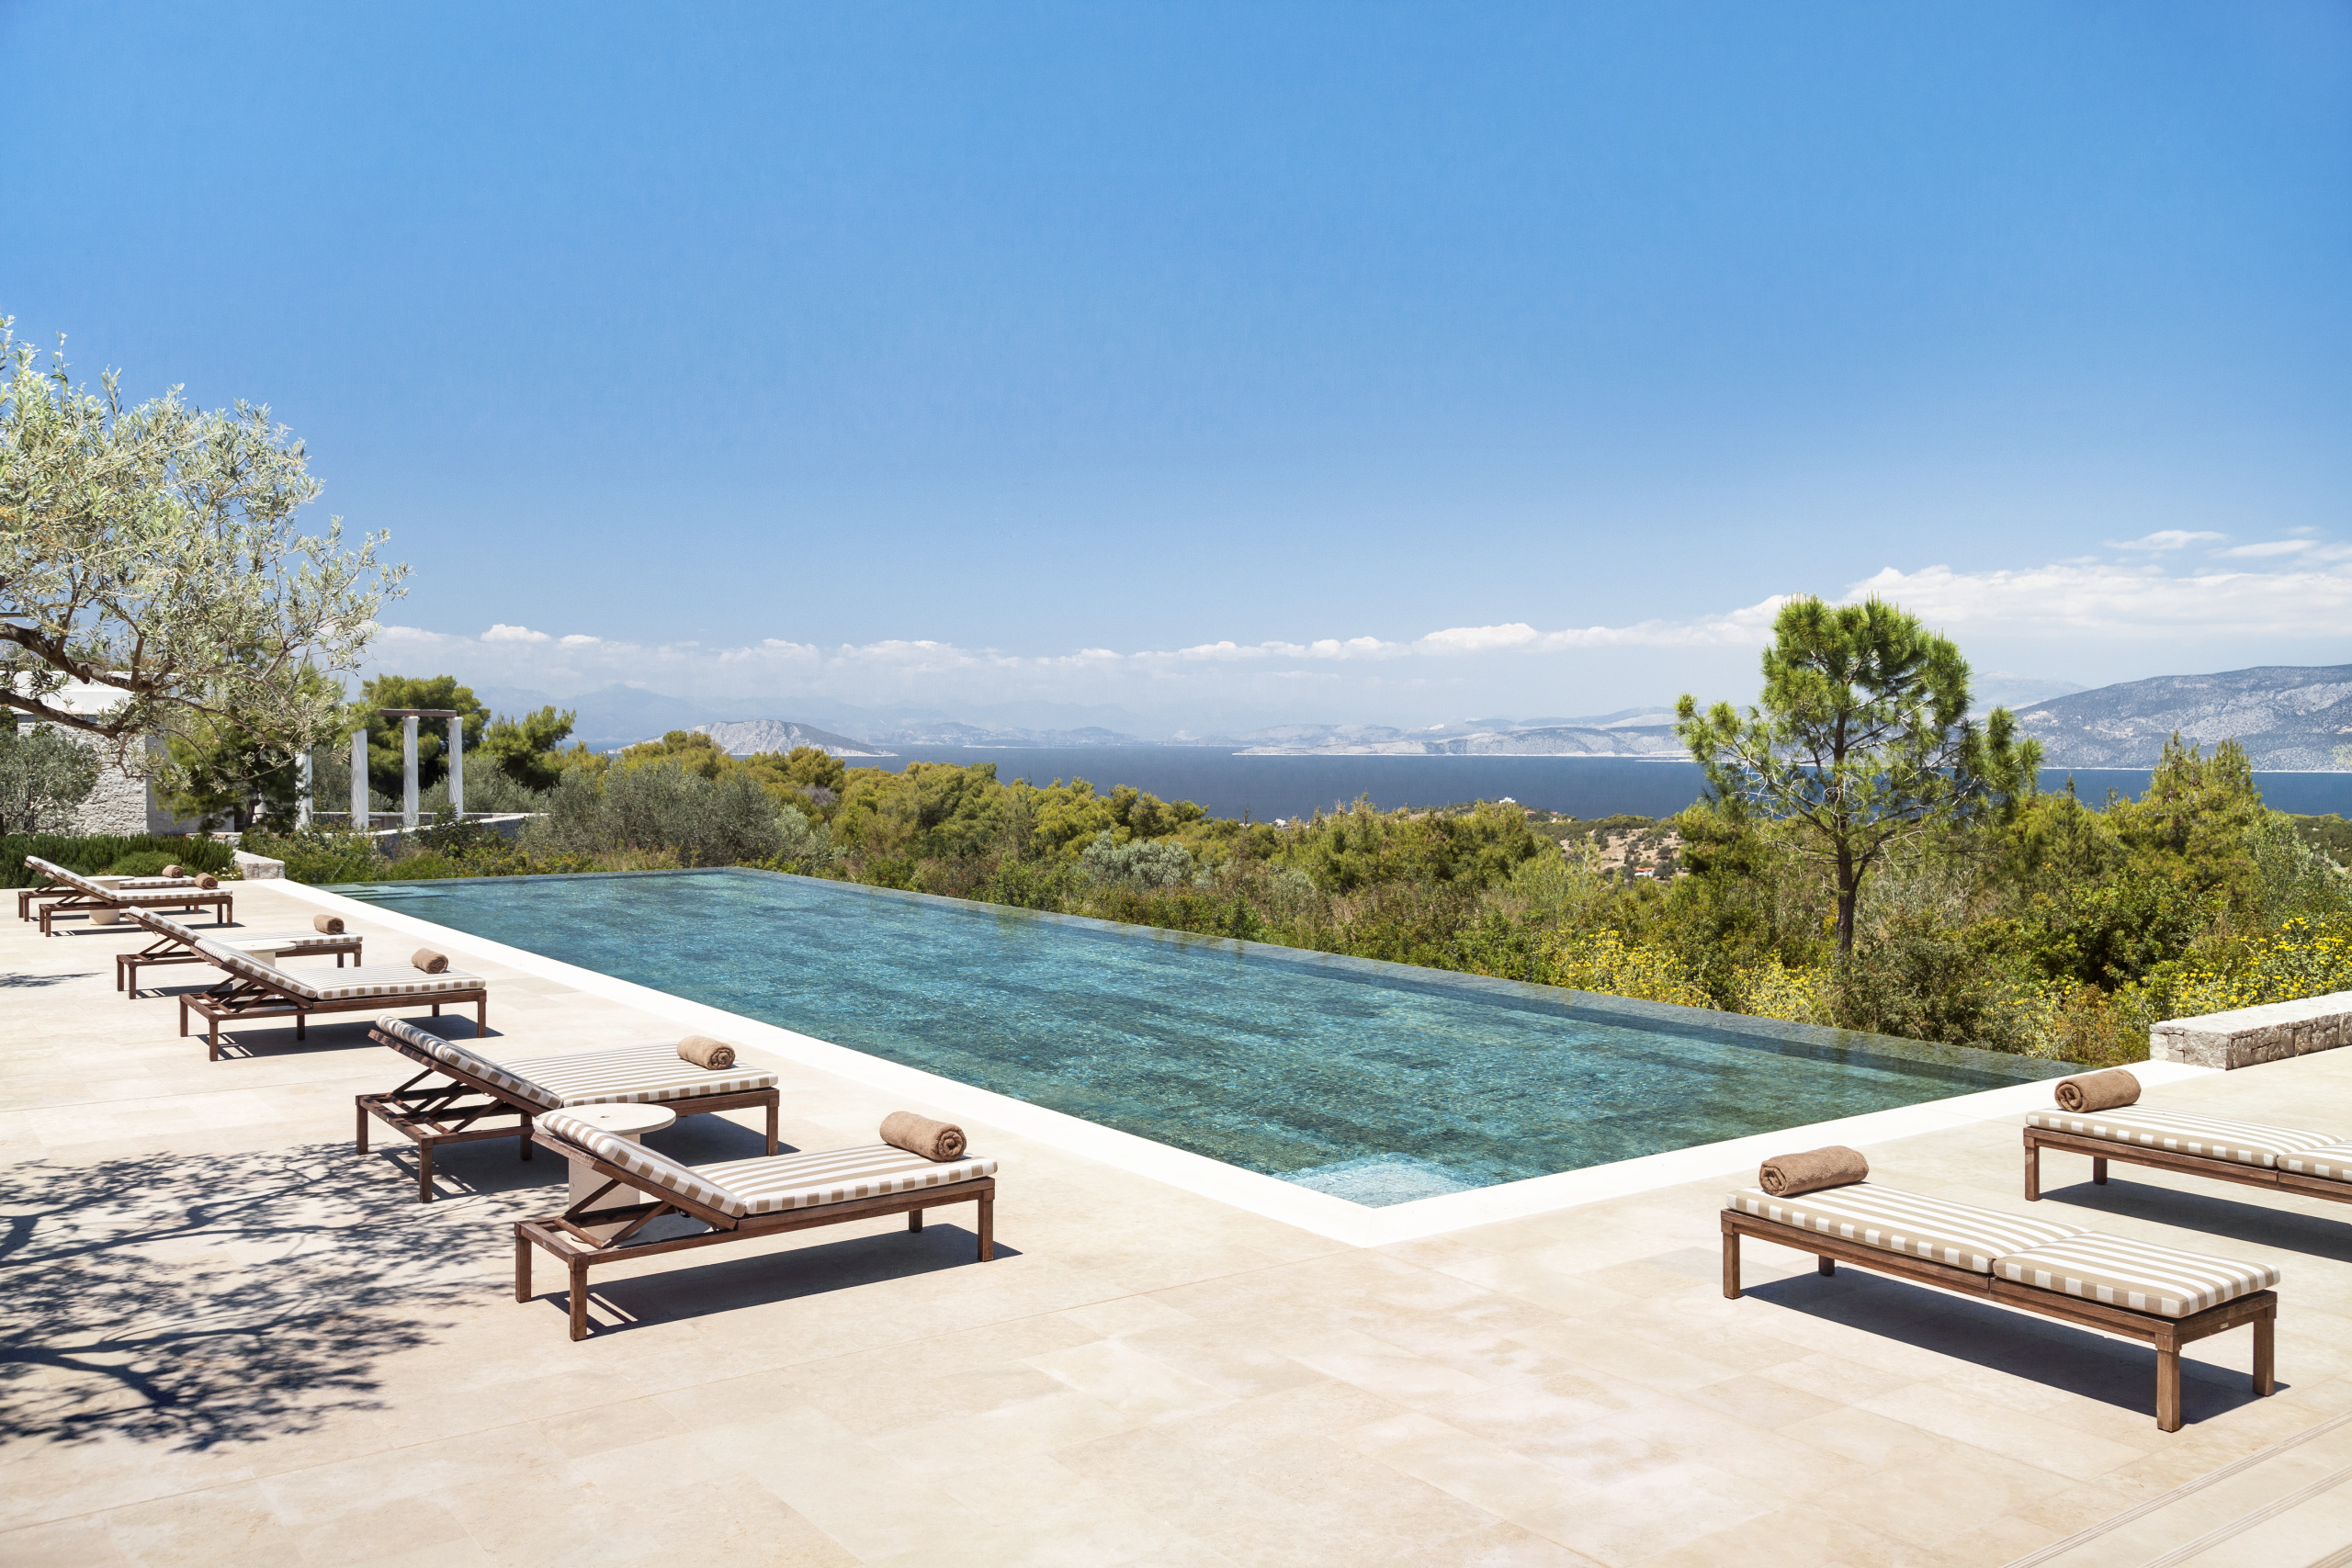 Amanzoe, Greece - Accommodation, Villas, Five bedroom villa, Terrace, Swimming pool, View